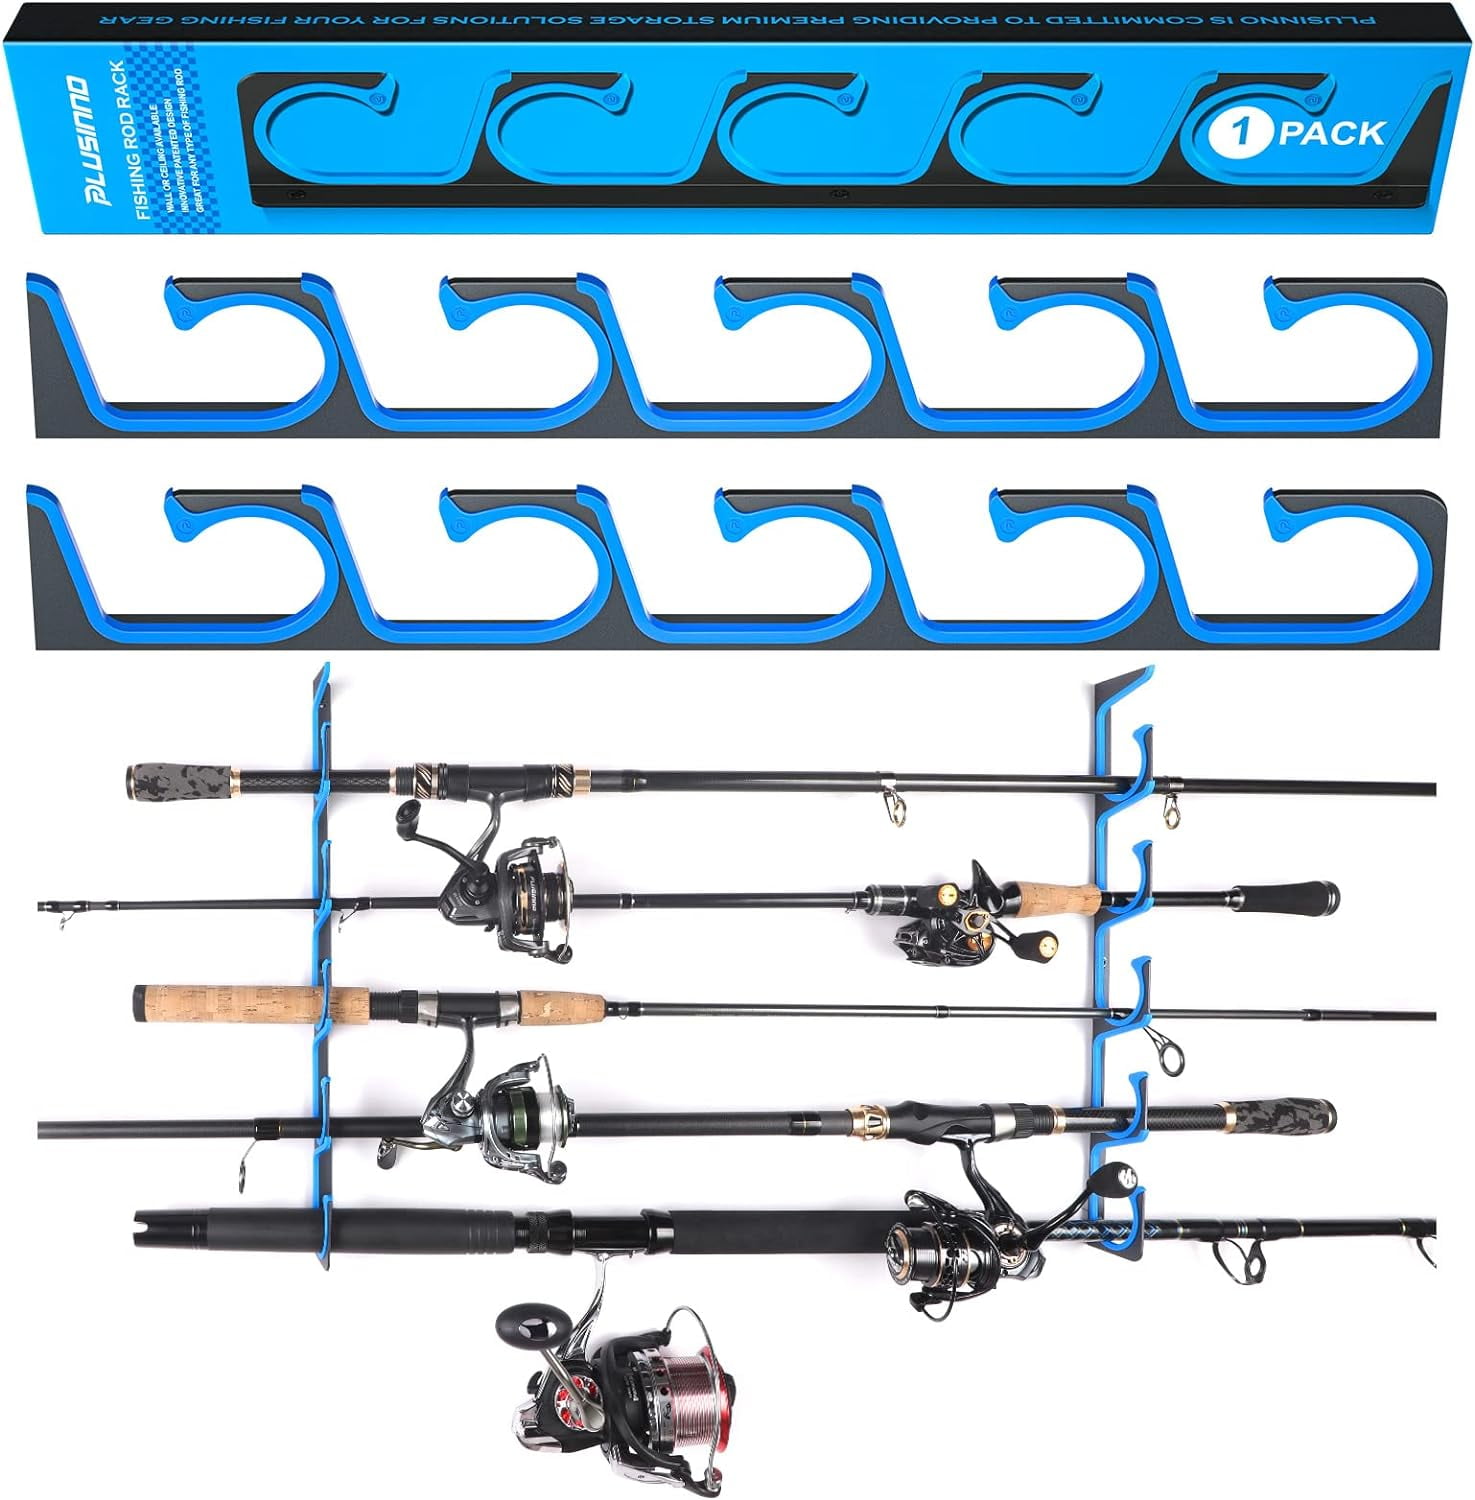 PLUSINNO H5 Horizontal Fishing Rod/Pole Holders for Garage, Wall or Ceiling Mounted Fishing Rod Rack, Aviation Aluminum Fishing Pole Holder Holds Up